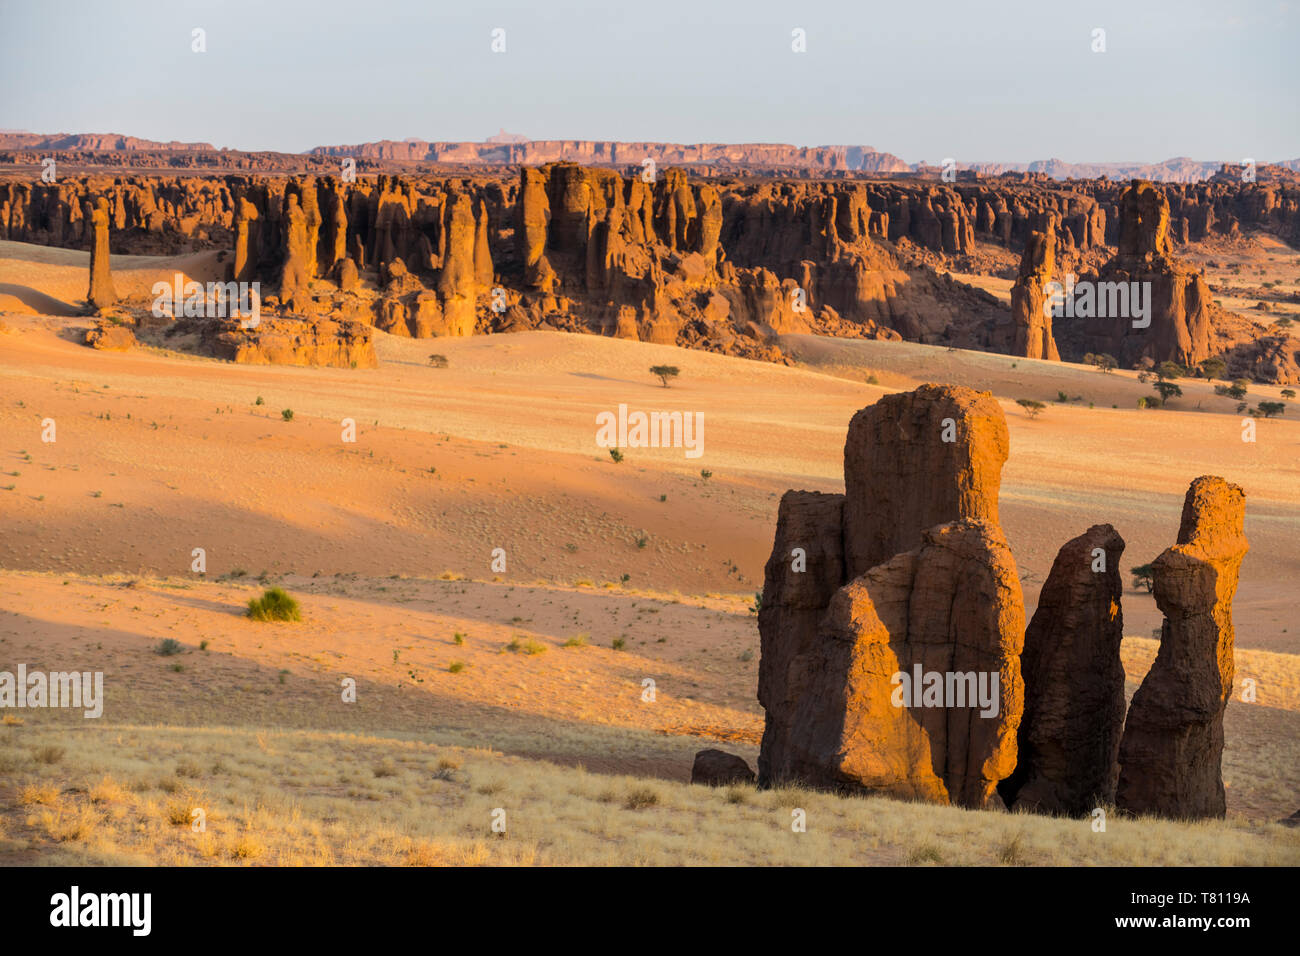 Vistas al precioso paisaje de la Meseta de Ennedi, Sitio del Patrimonio Mundial de la UNESCO, la región de Ennedi, Chad, África Foto de stock